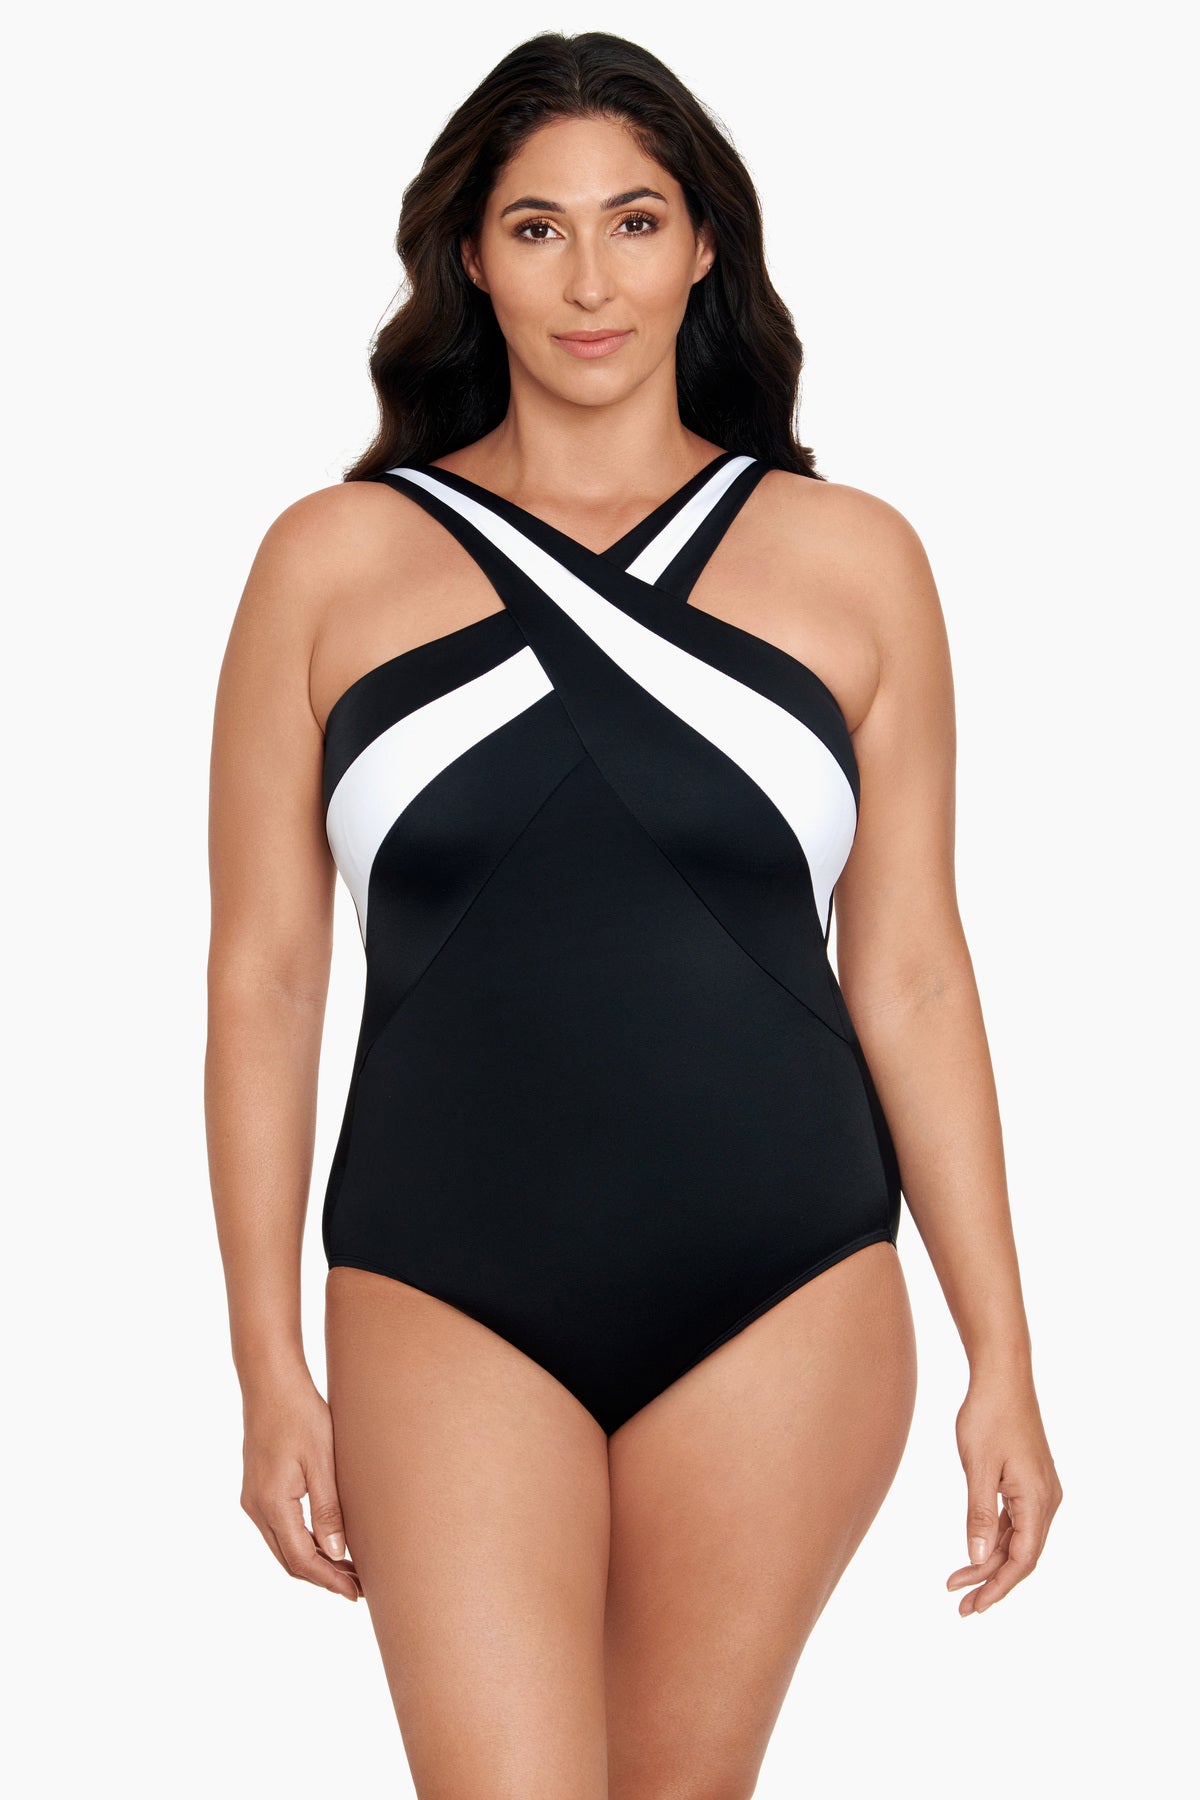 Robby Len Womans Swim Fashion Sz 8 One Piece Black White Built In Bra